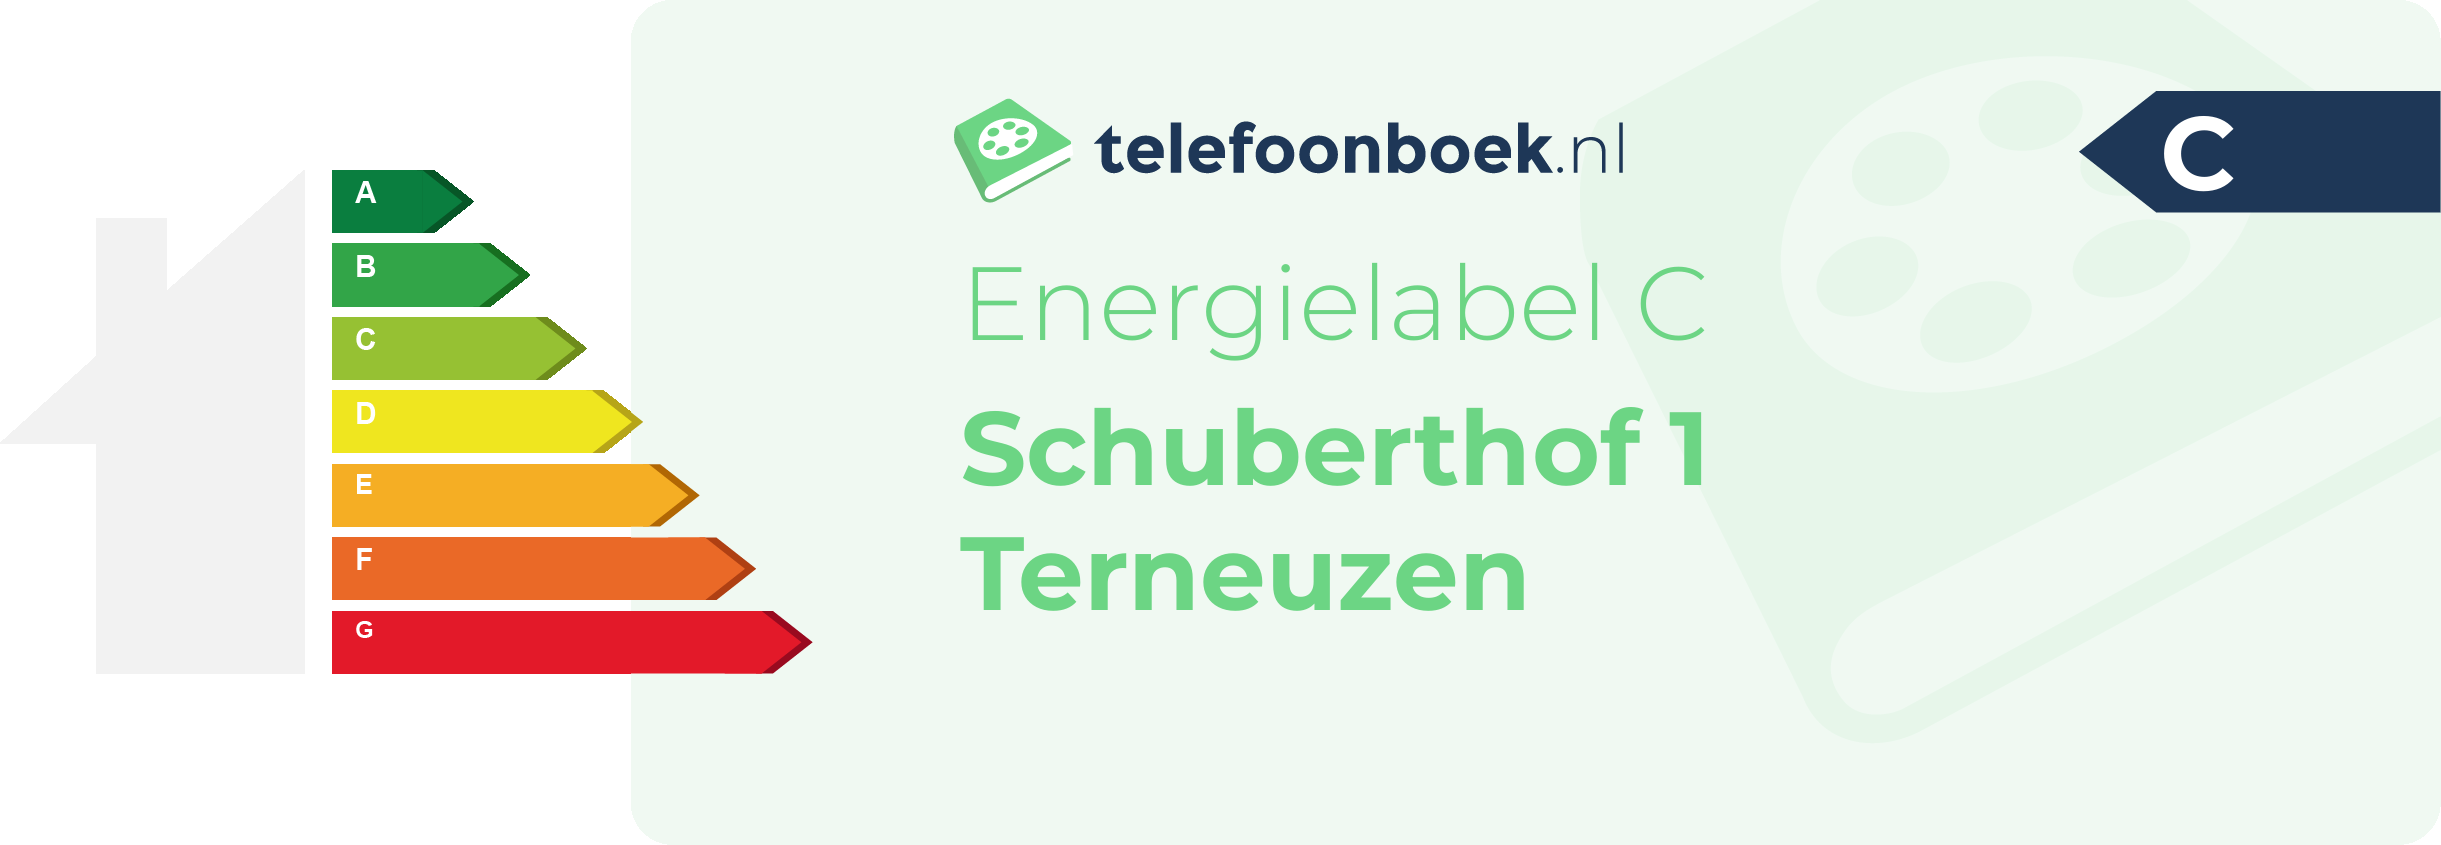 Energielabel Schuberthof 1 Terneuzen